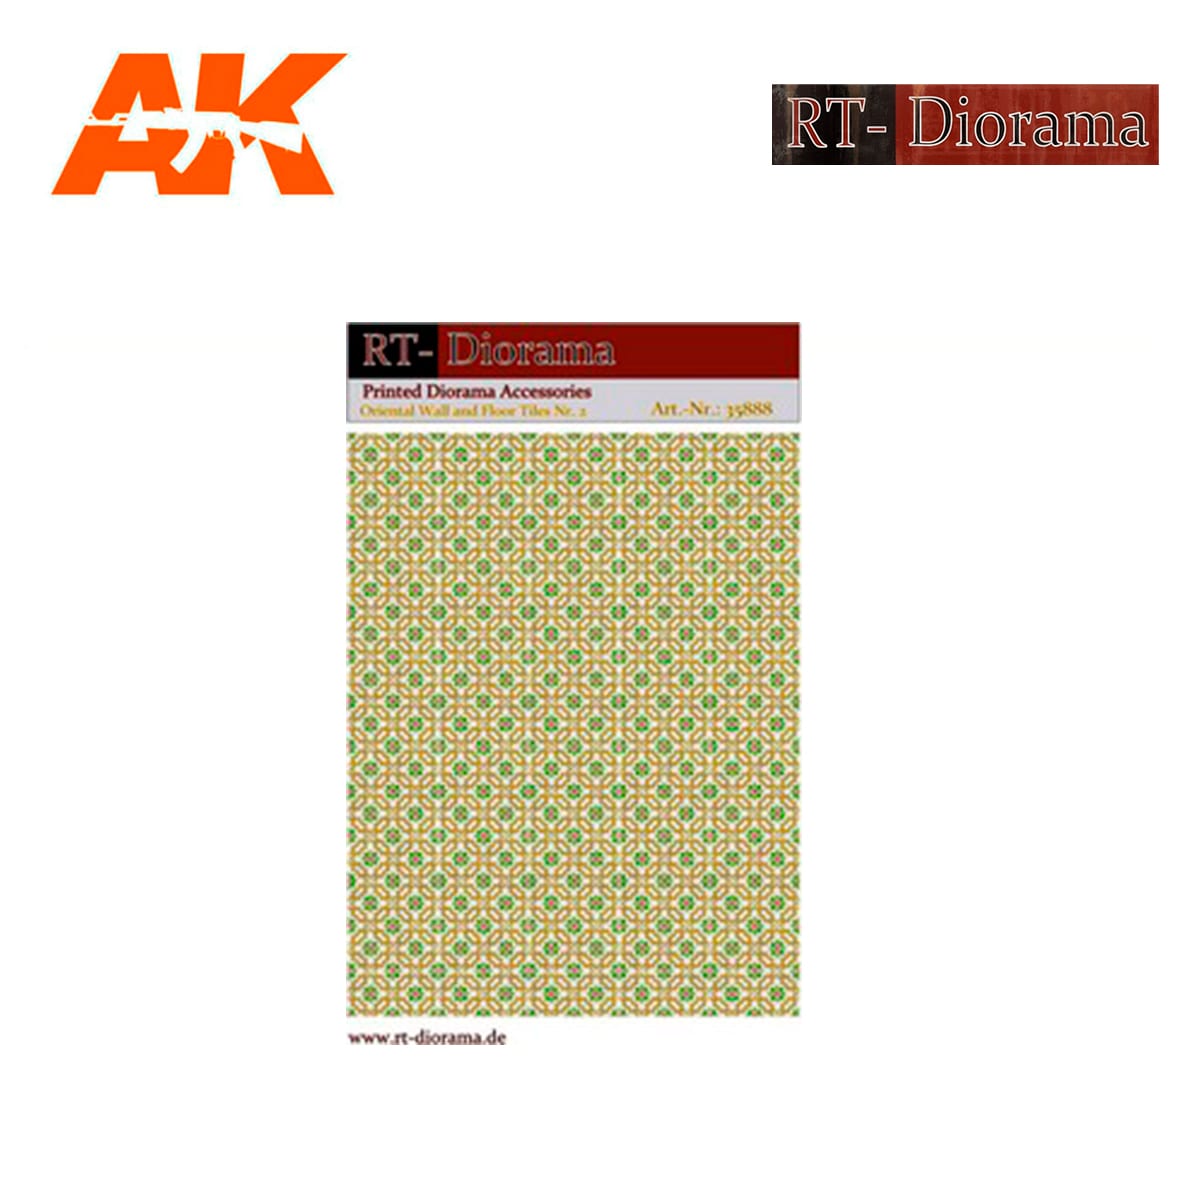 Printed Accesories: Oriental Wall and Floor Tiles Nr.2